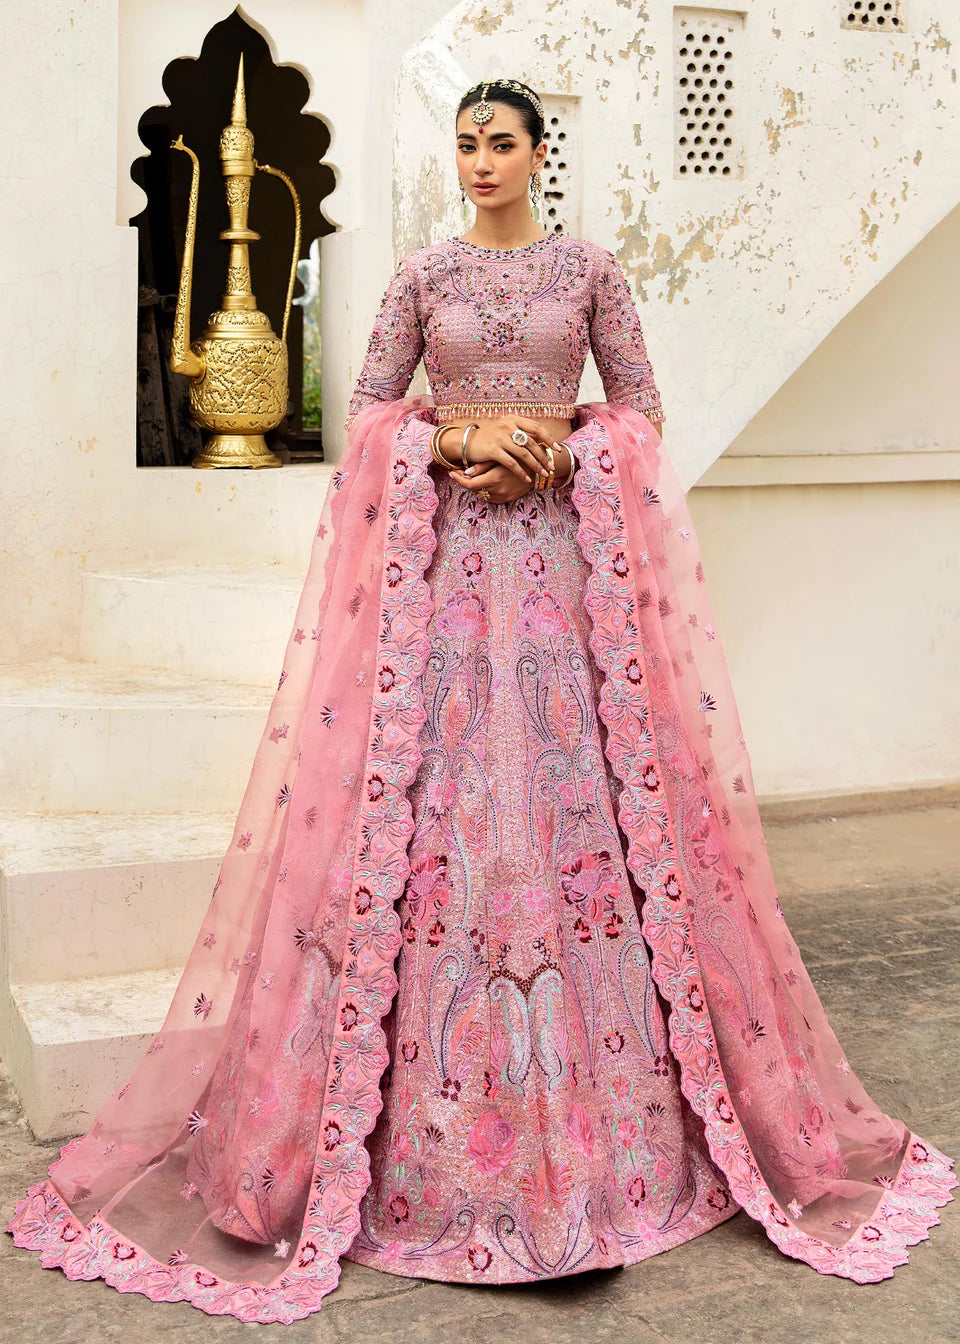 Waqas Shah | Taj Mahal | BAHAR BANO - Khanumjan  Pakistani Clothes and Designer Dresses in UK, USA 